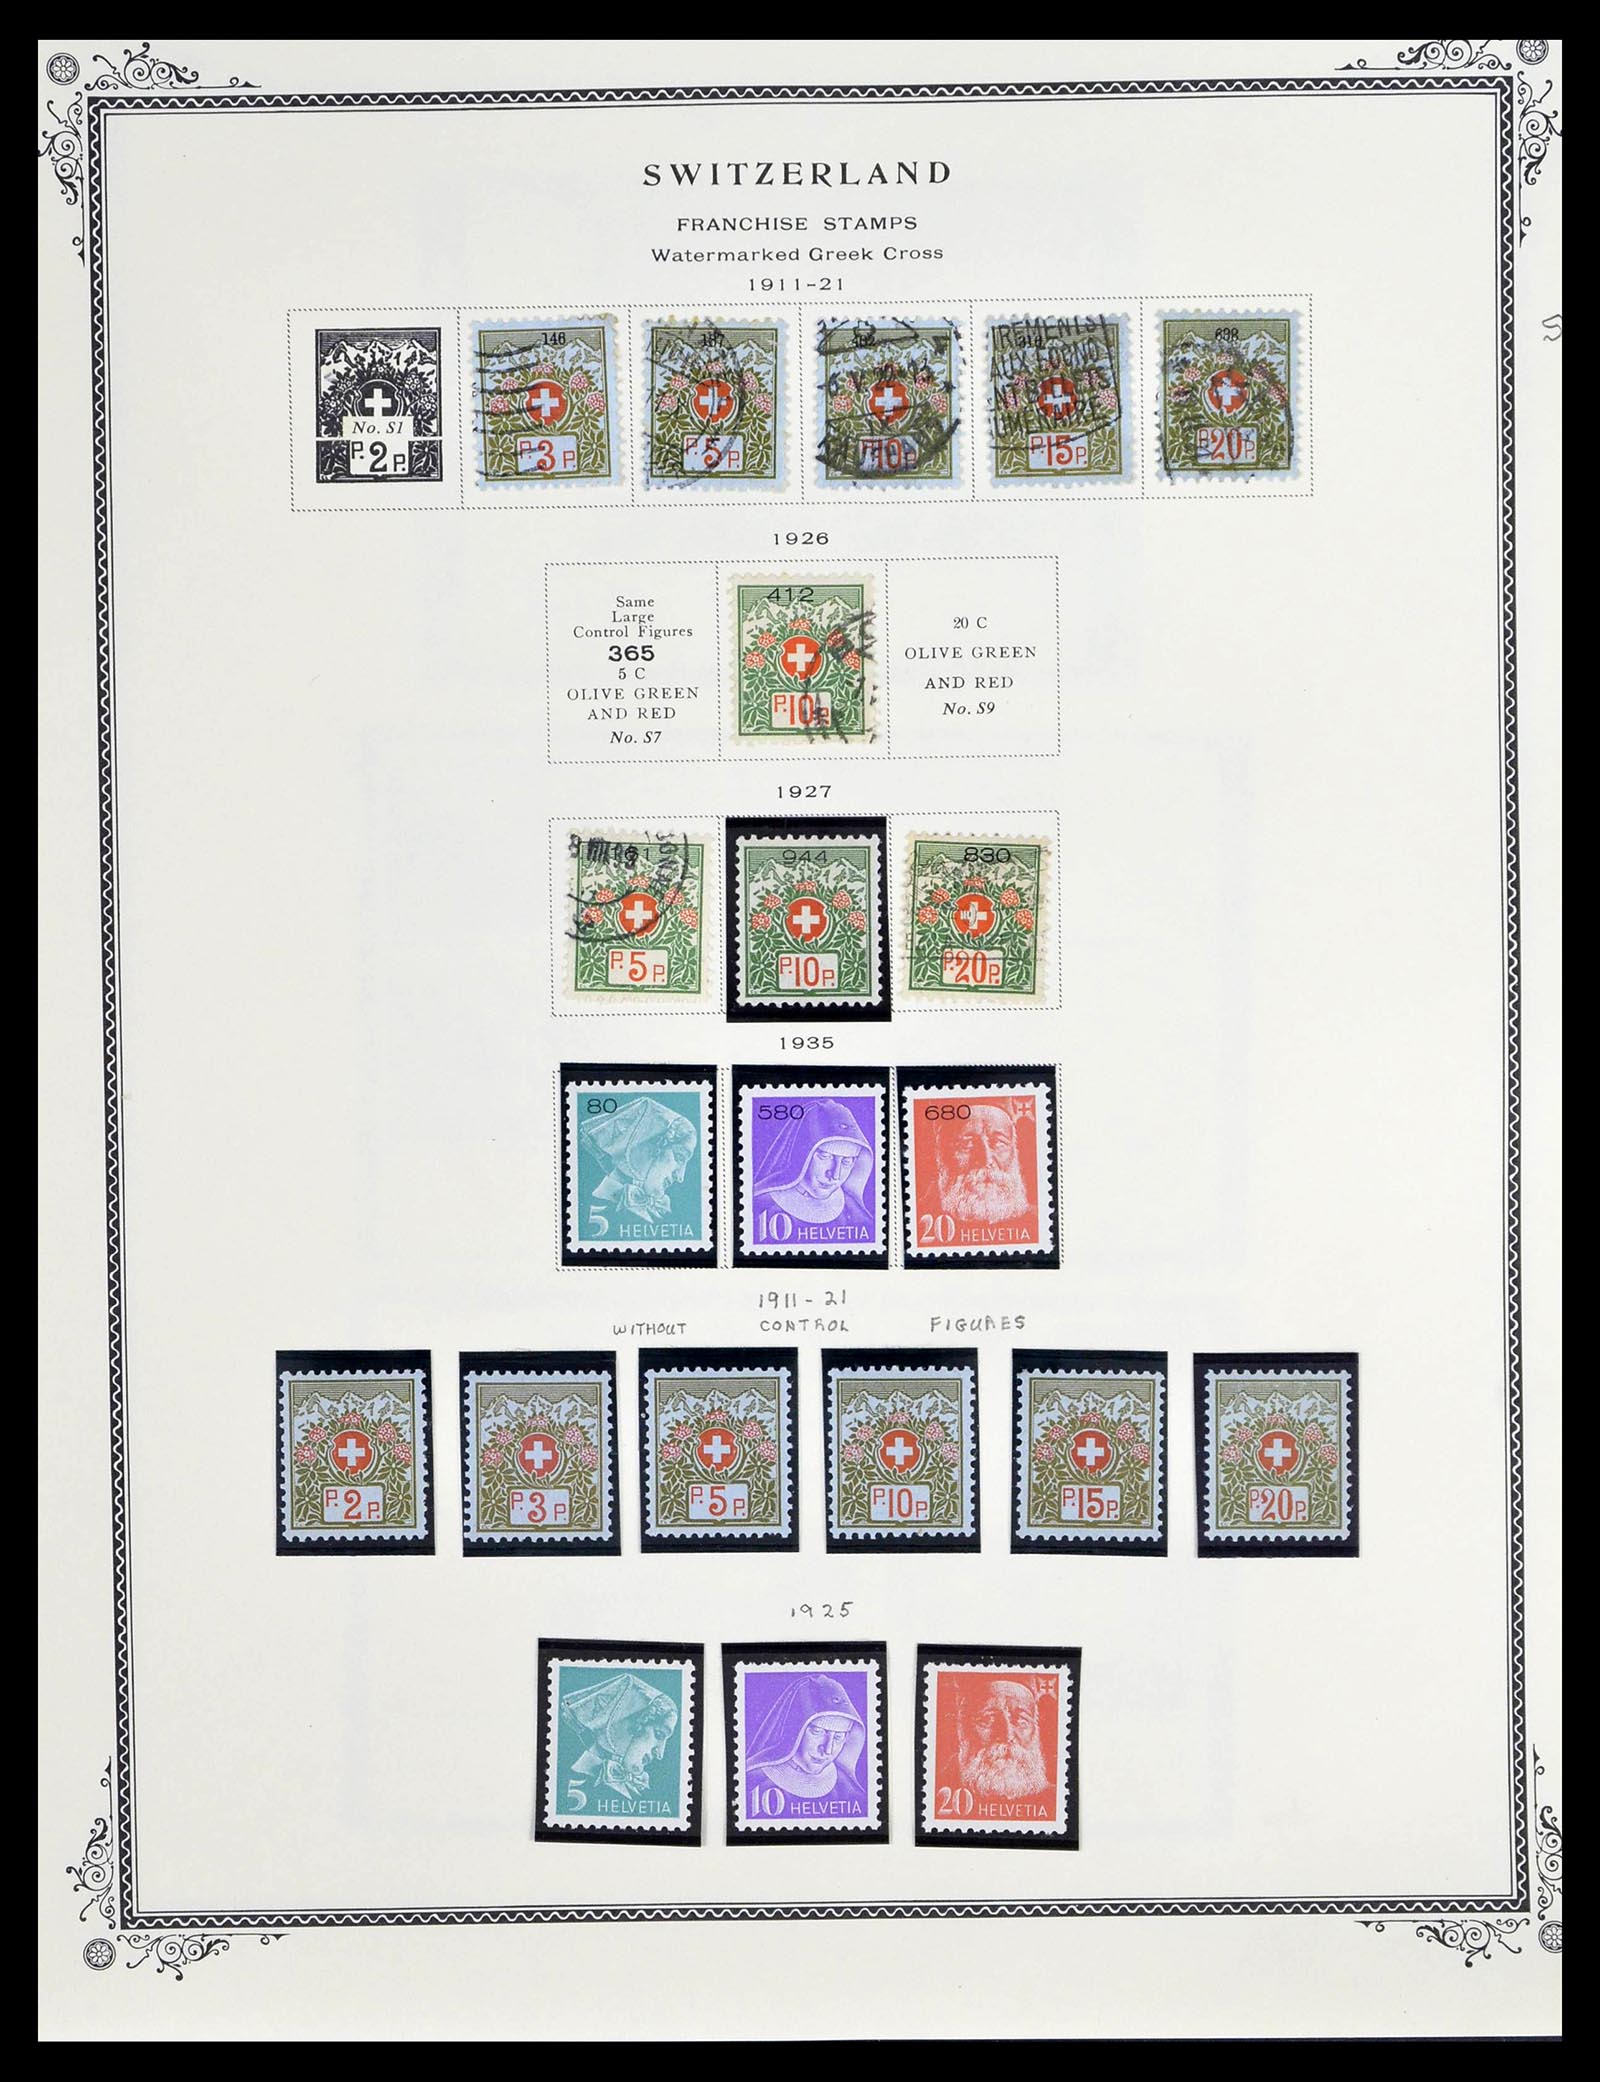 39178 0267 - Stamp collection 39178 Switzerland 1850-1989.